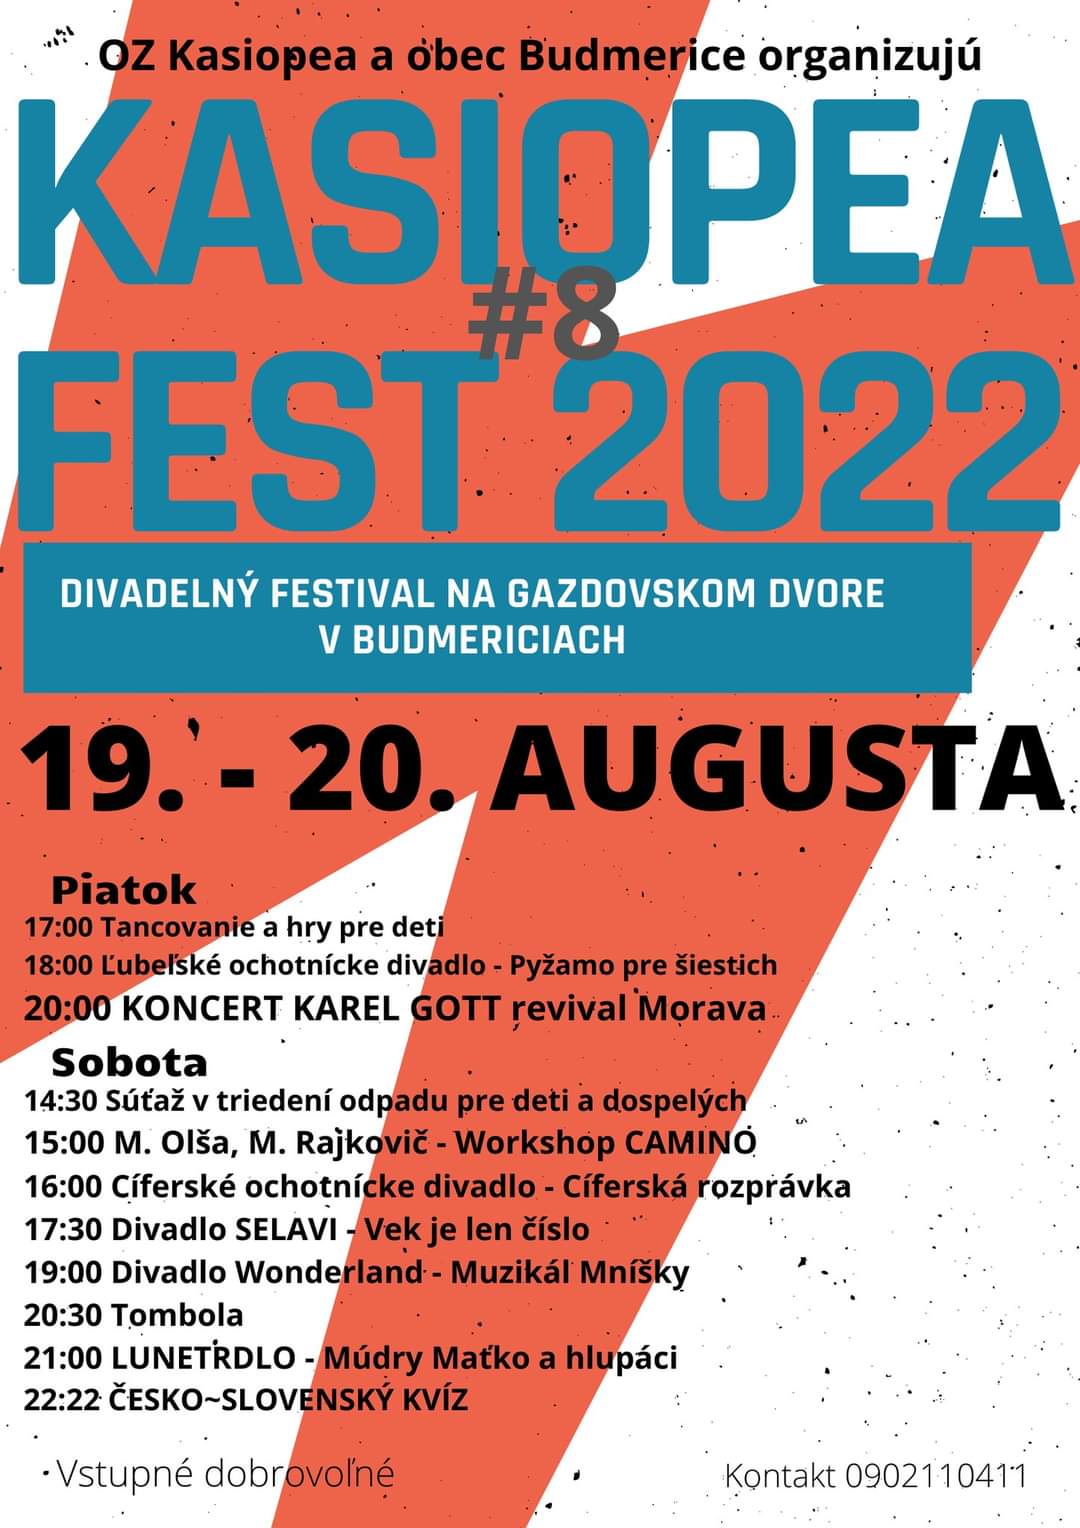 Divadeln festival Kasiopeafest 2022 Budmerice - 8. ronk